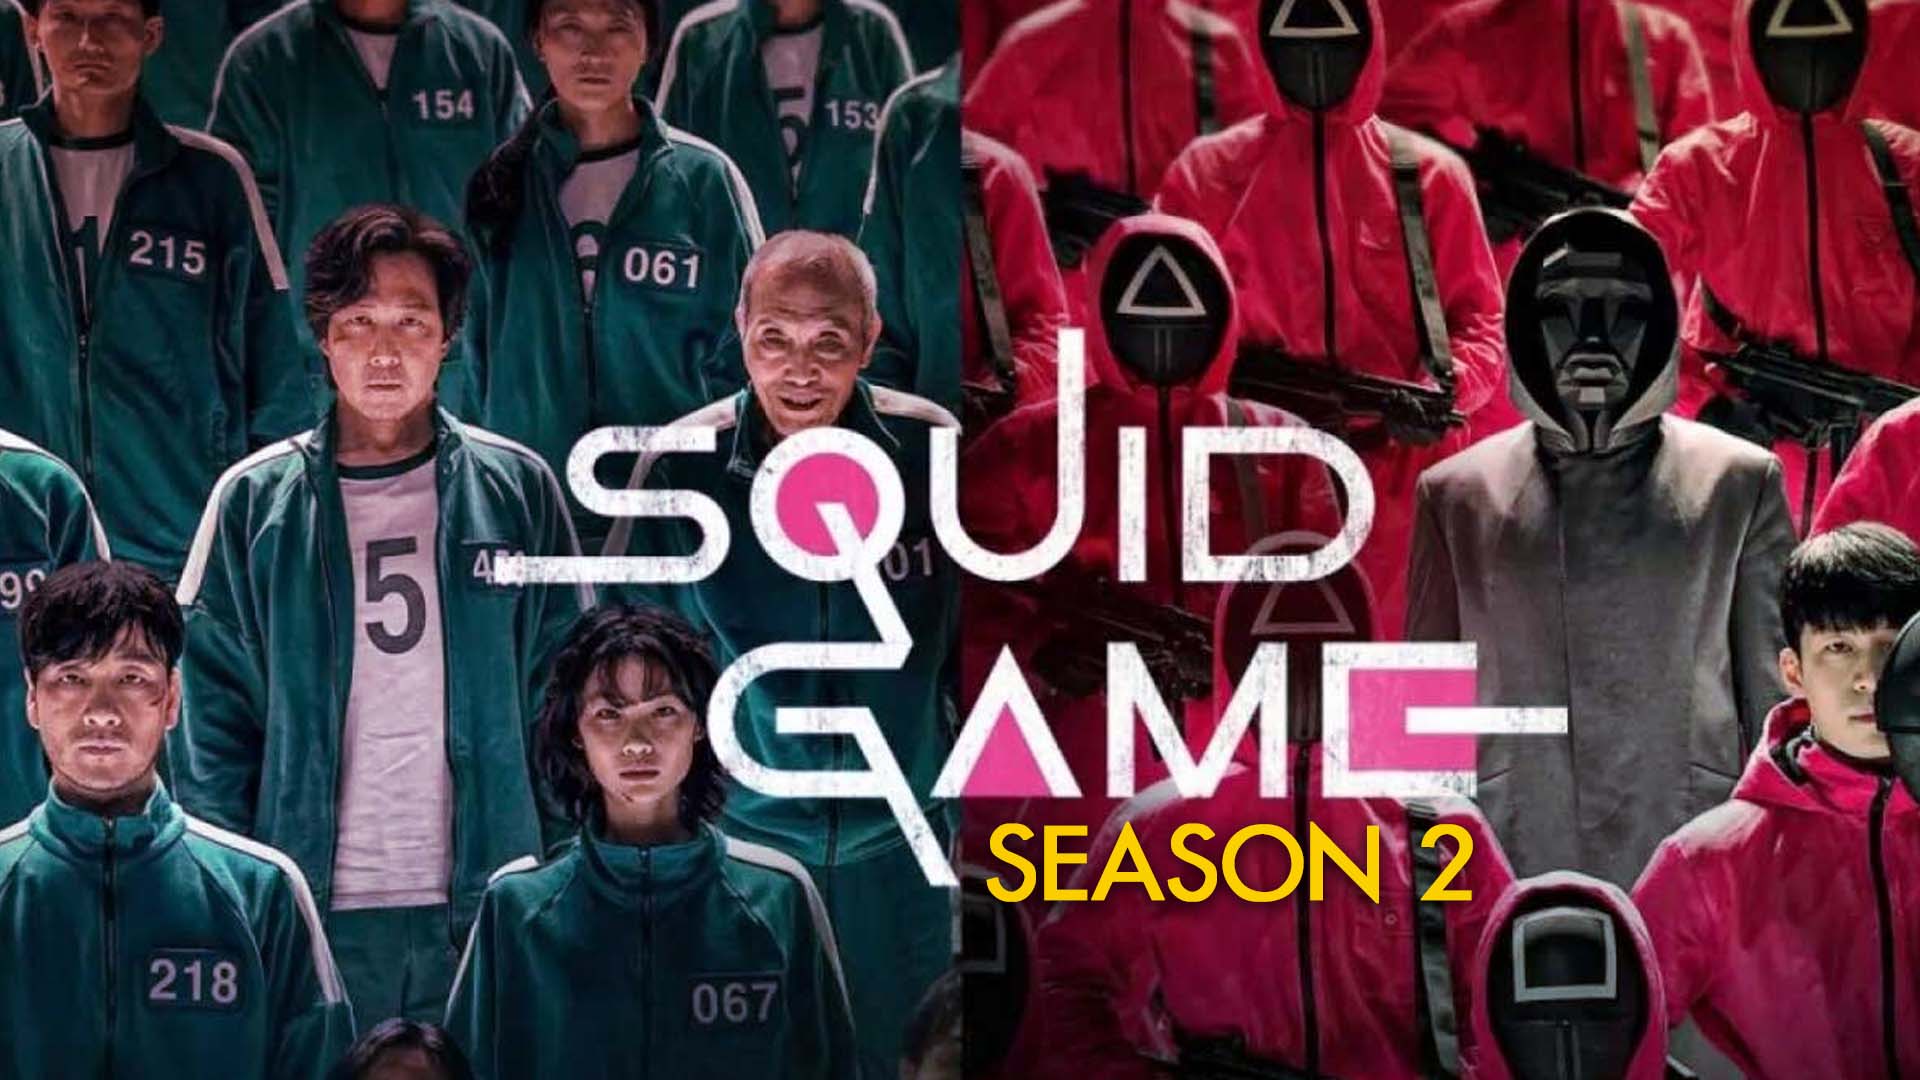 Upcoming Movies - Squid Game Season 2 coming next year! 🎥